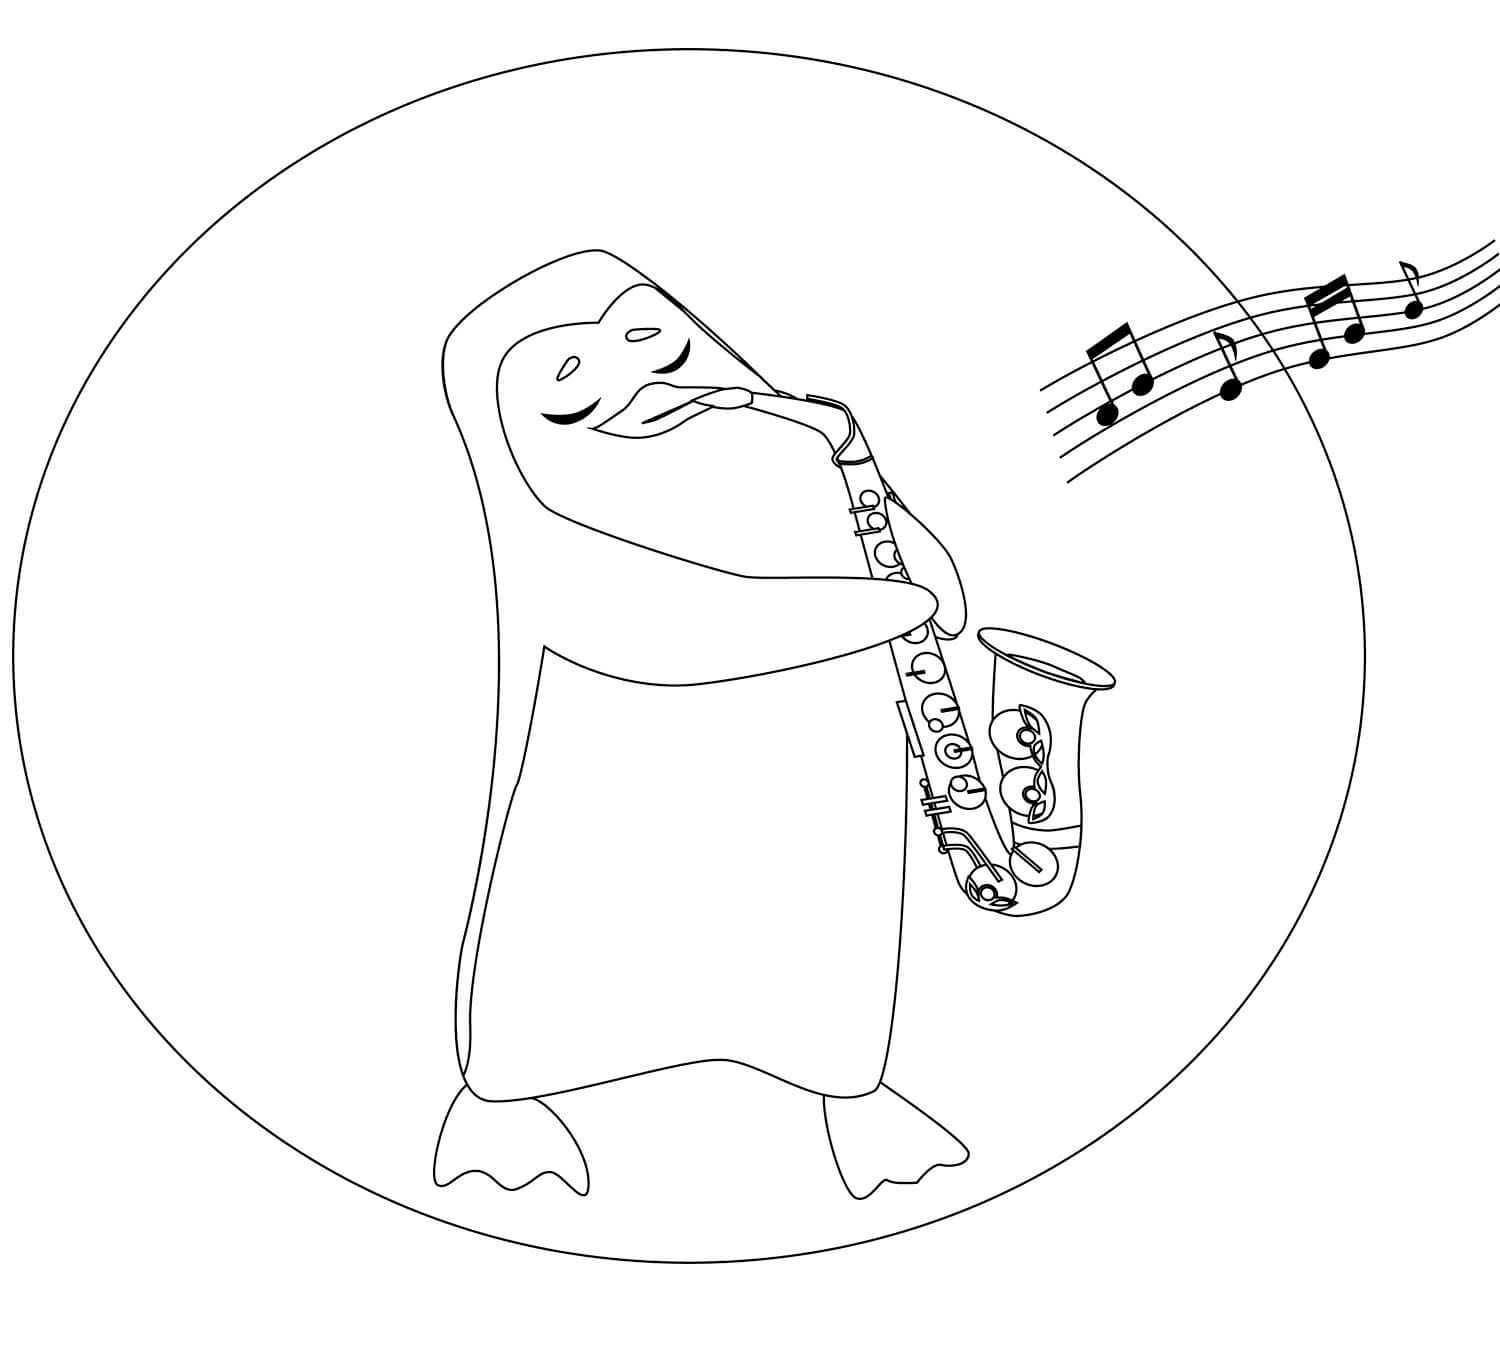 Pinguin spielt Saxophon